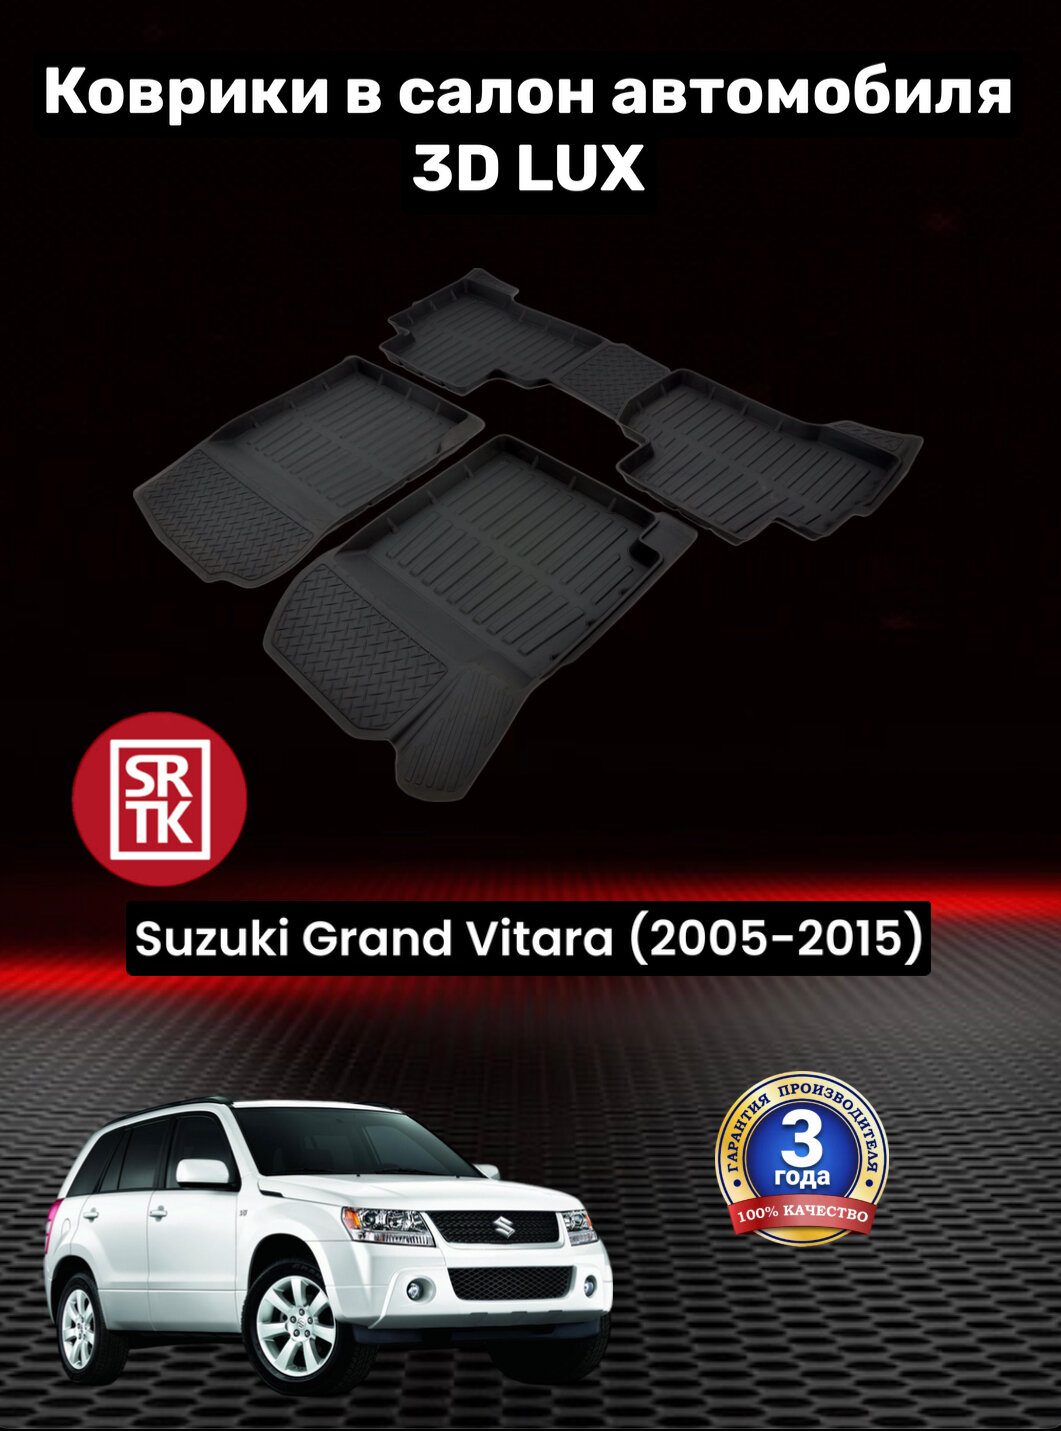 Коврики резиновые Сузуки Гранд Витара (2005-2015)/ Suzuki Grand Vitara (2005-2015) 3D LUX SRTK (Саранск) комплект в салон